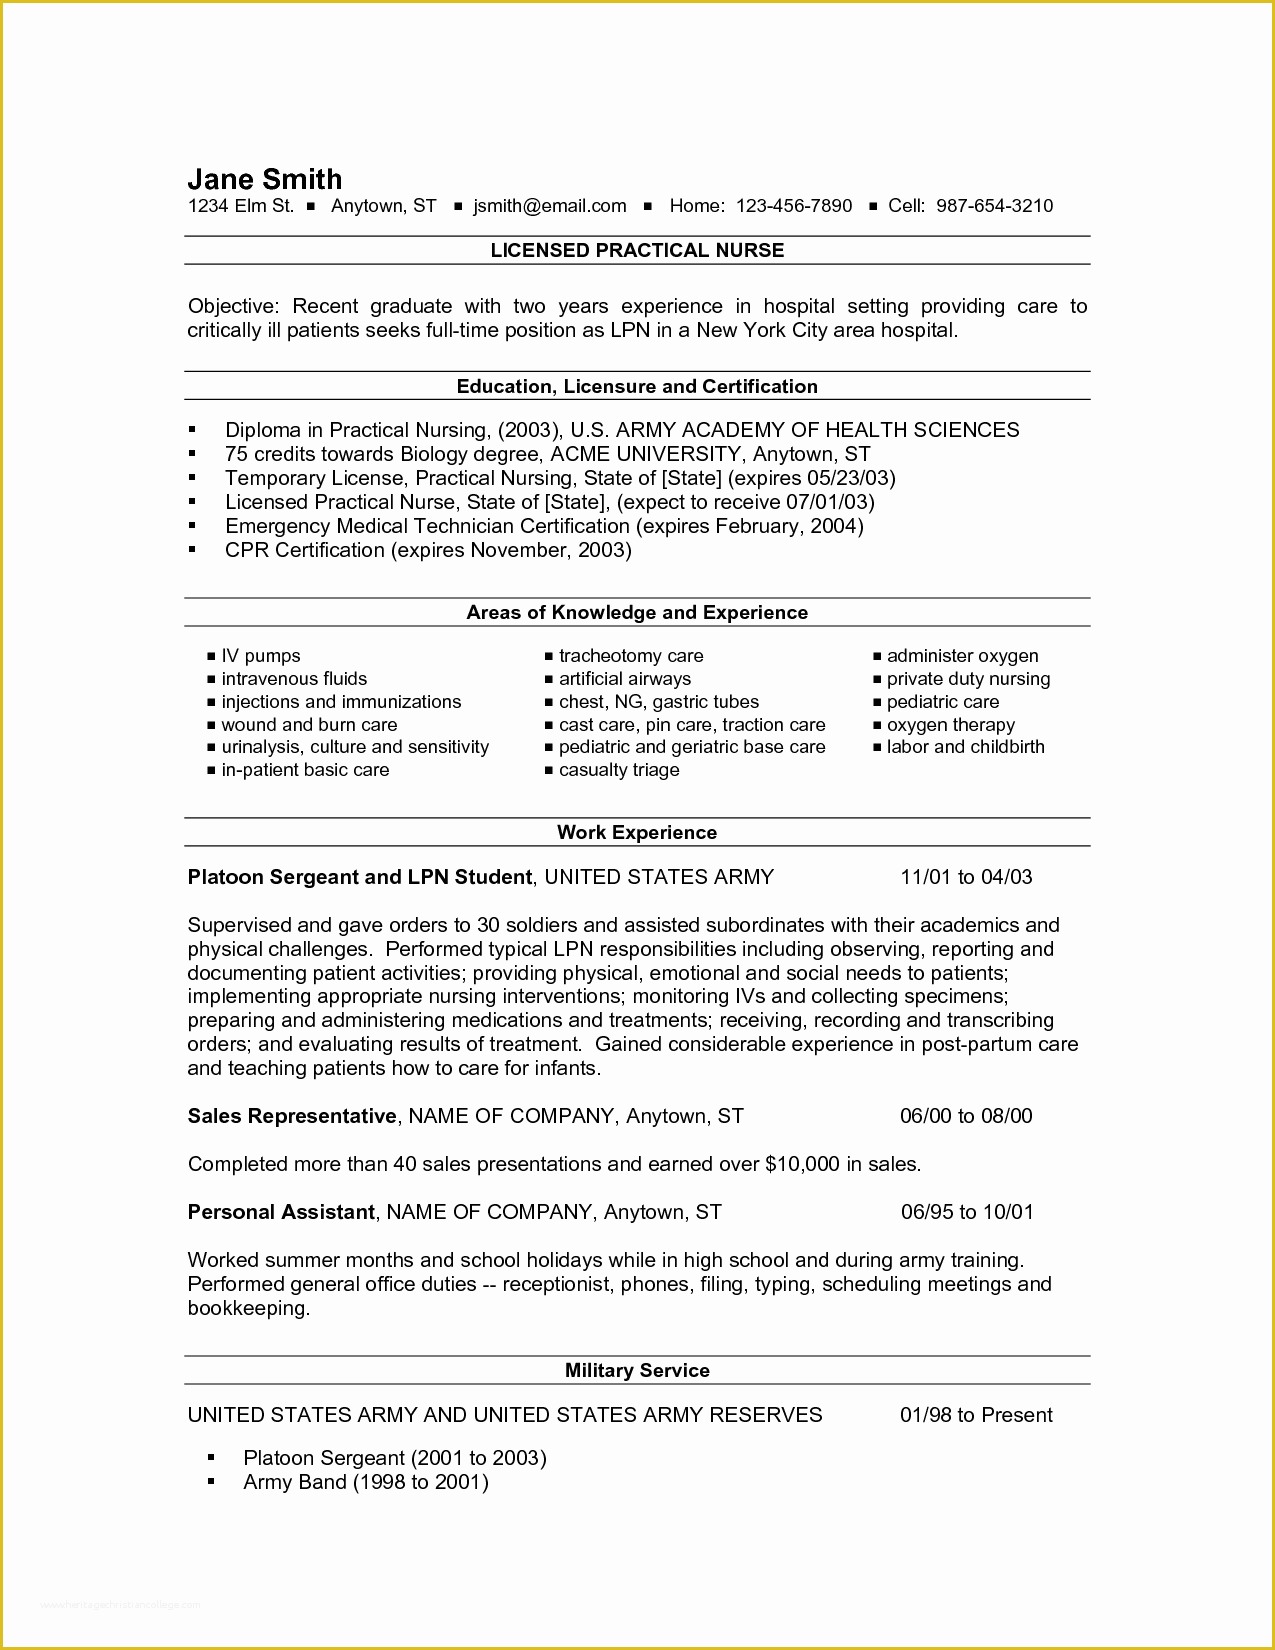 Free Resume Templates for Lpn Nurses Of New Grad Lpn Resume Resume Ideas